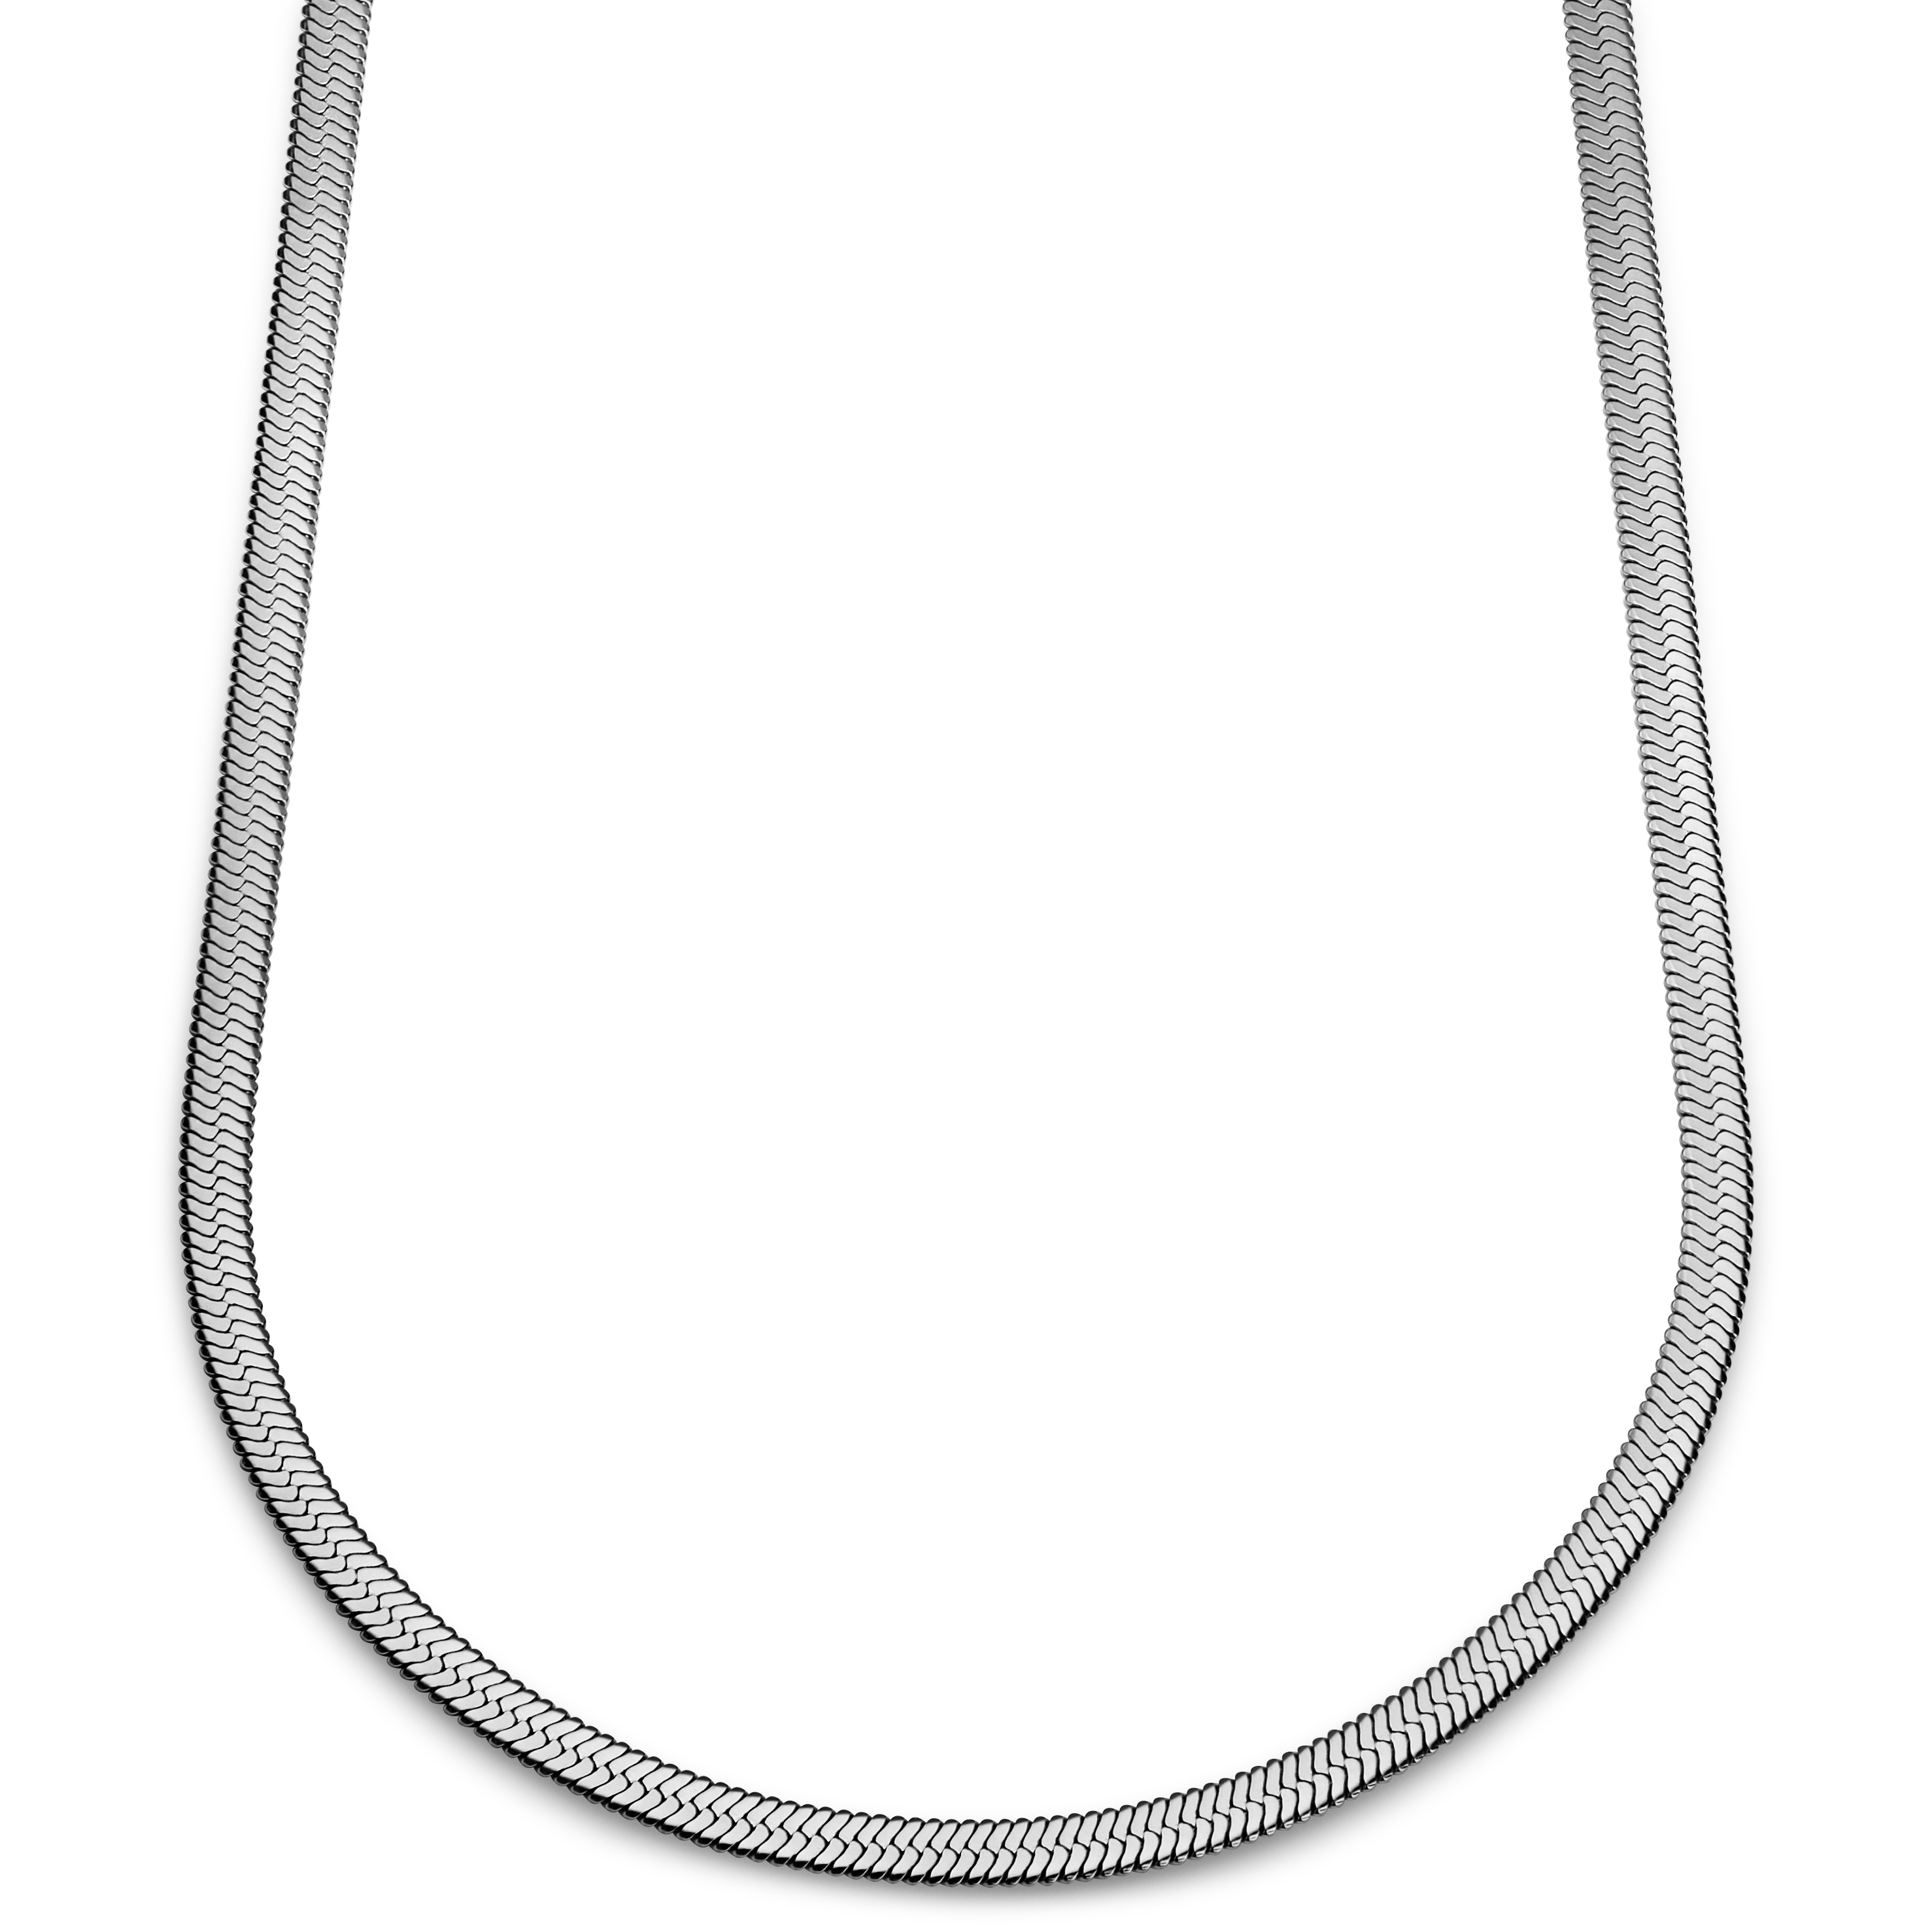 7MM Silver Classic Herringbone Chain Necklace 20